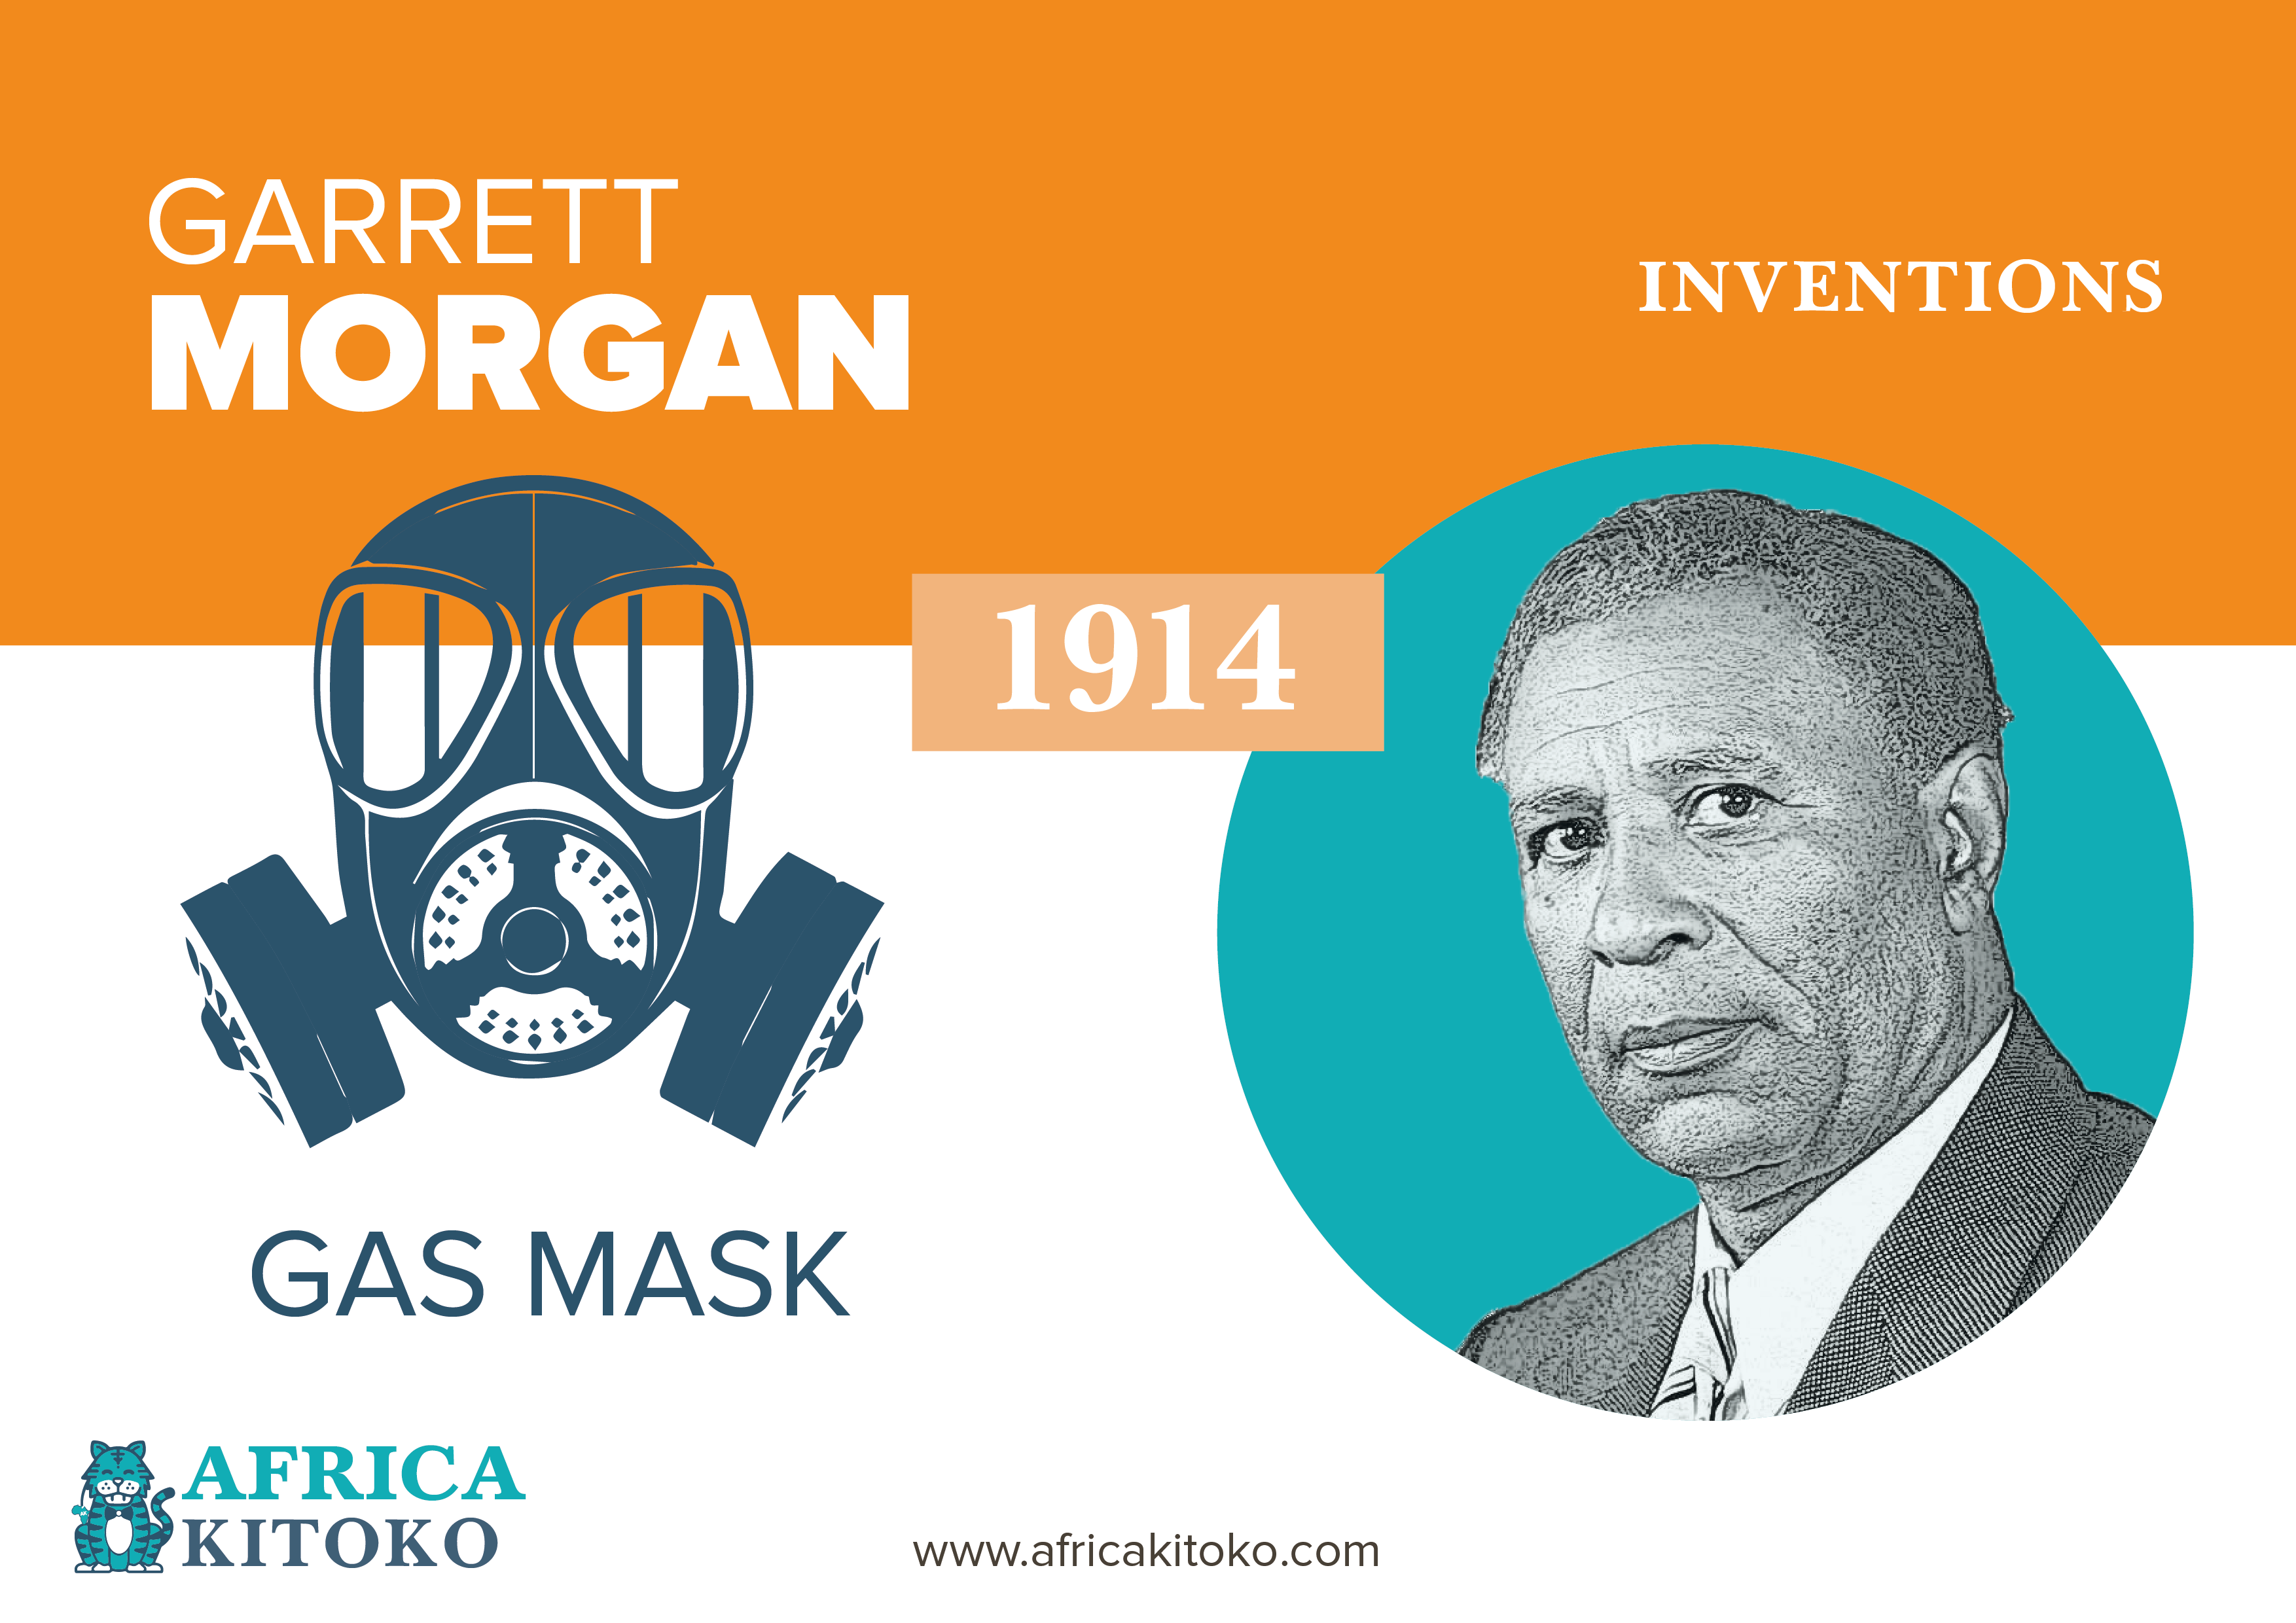 Garrett Morgan, the inventor of the gas mask – AFRICA KITOKO